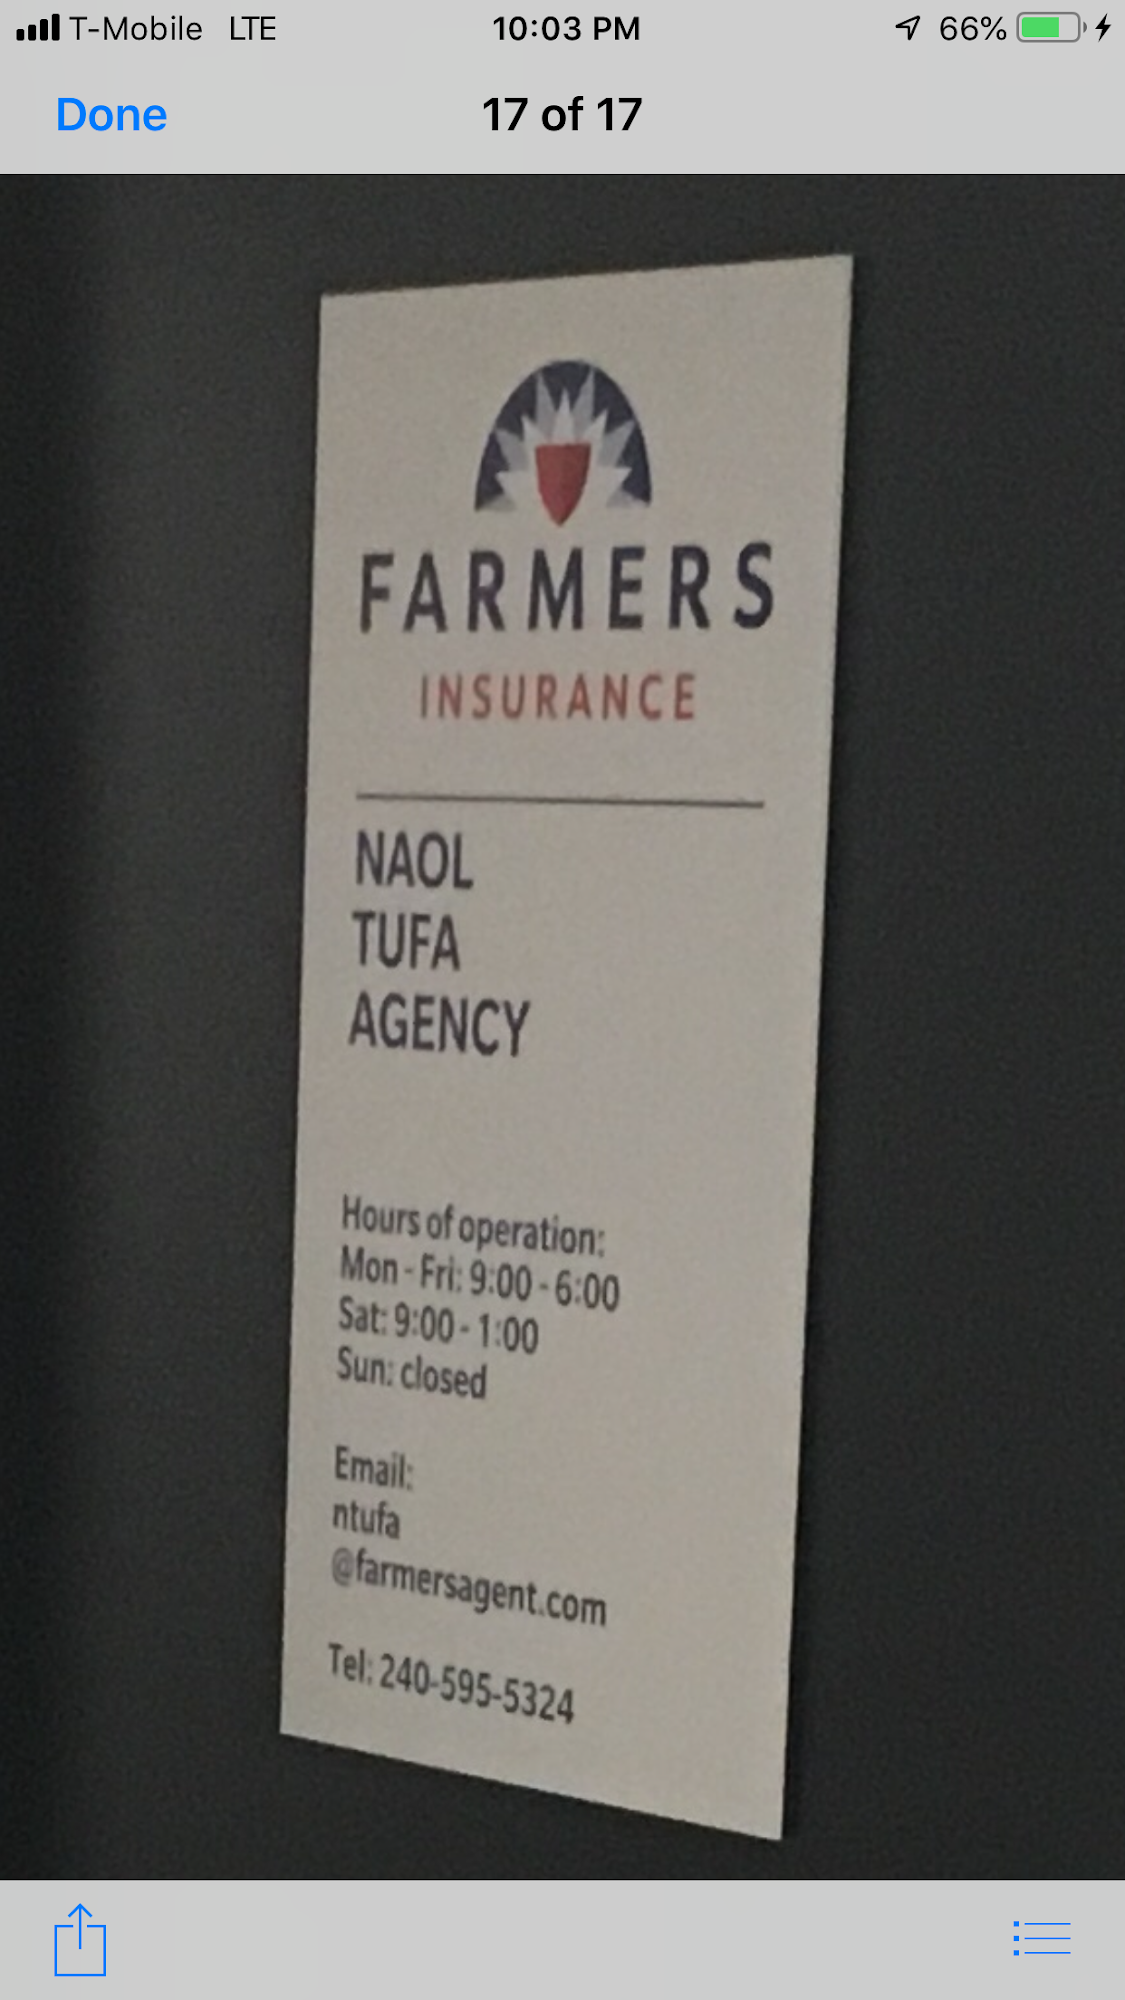 Farmers Insurance Naol Agency